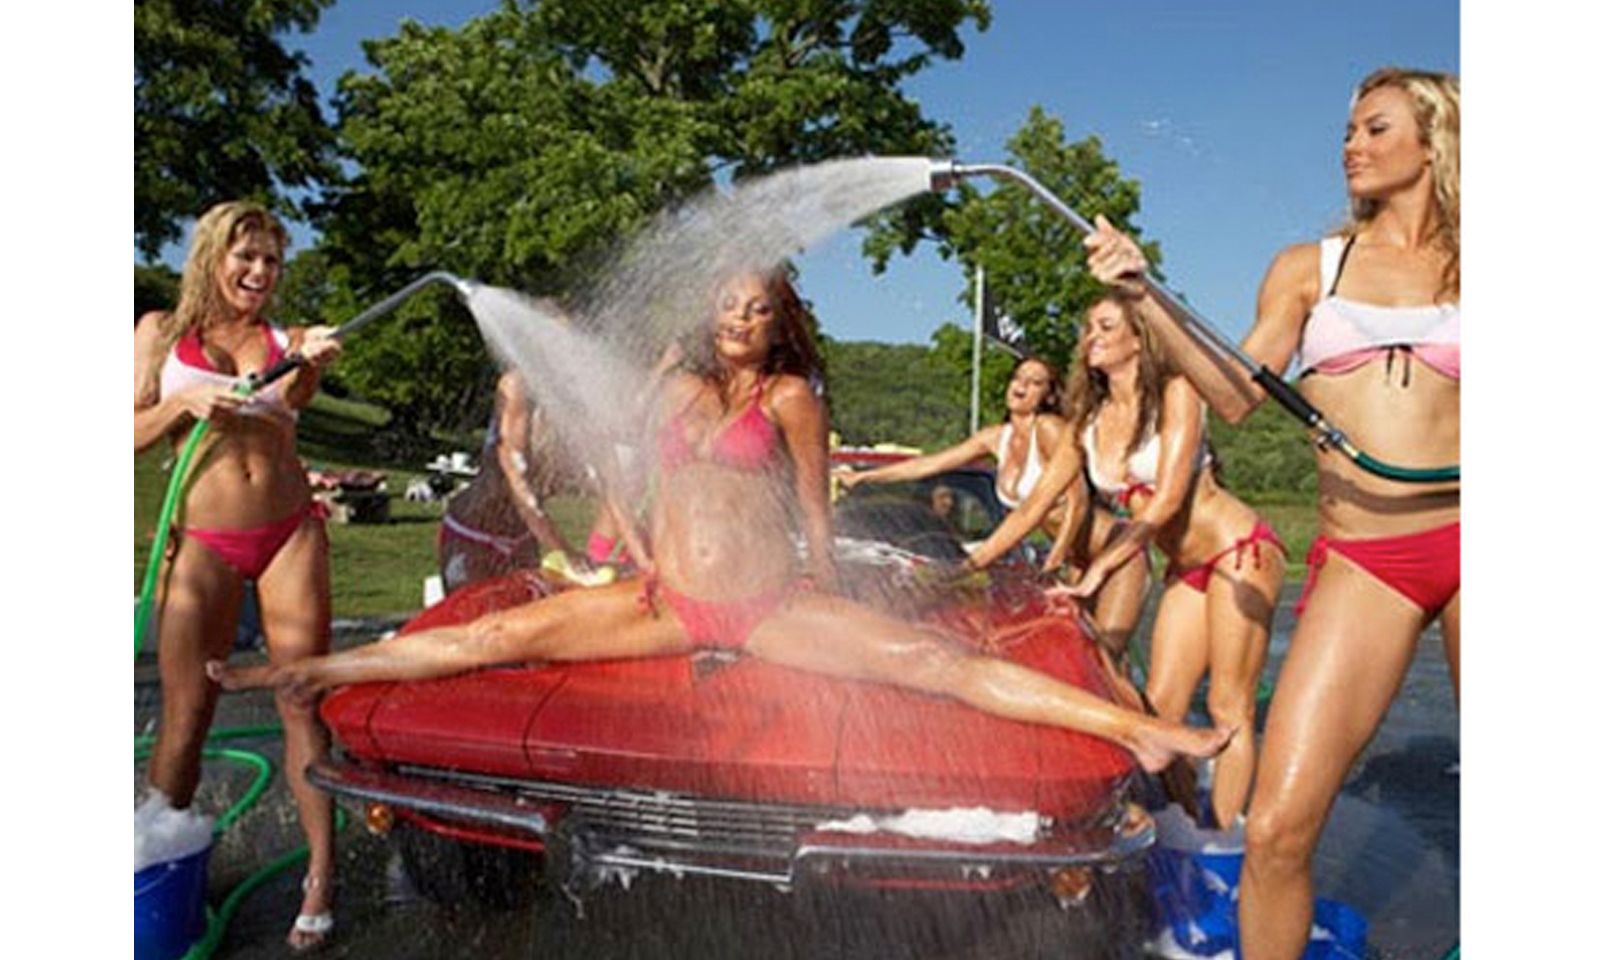 devon rollison add topless girls washing cars photo